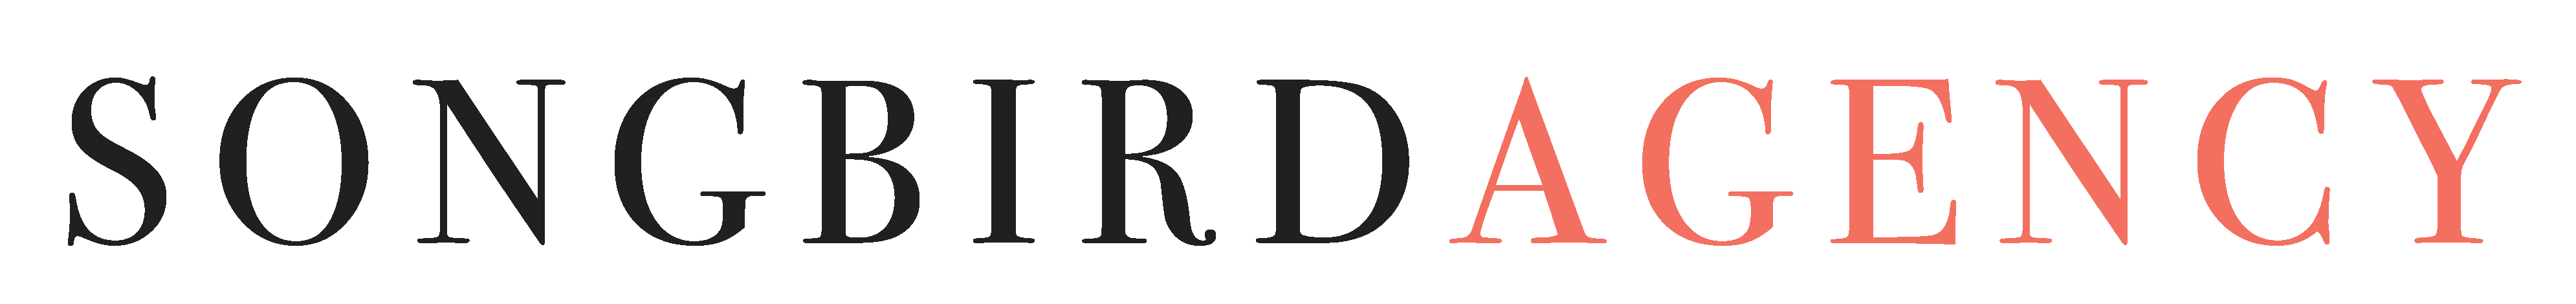 Songbird Agency logo